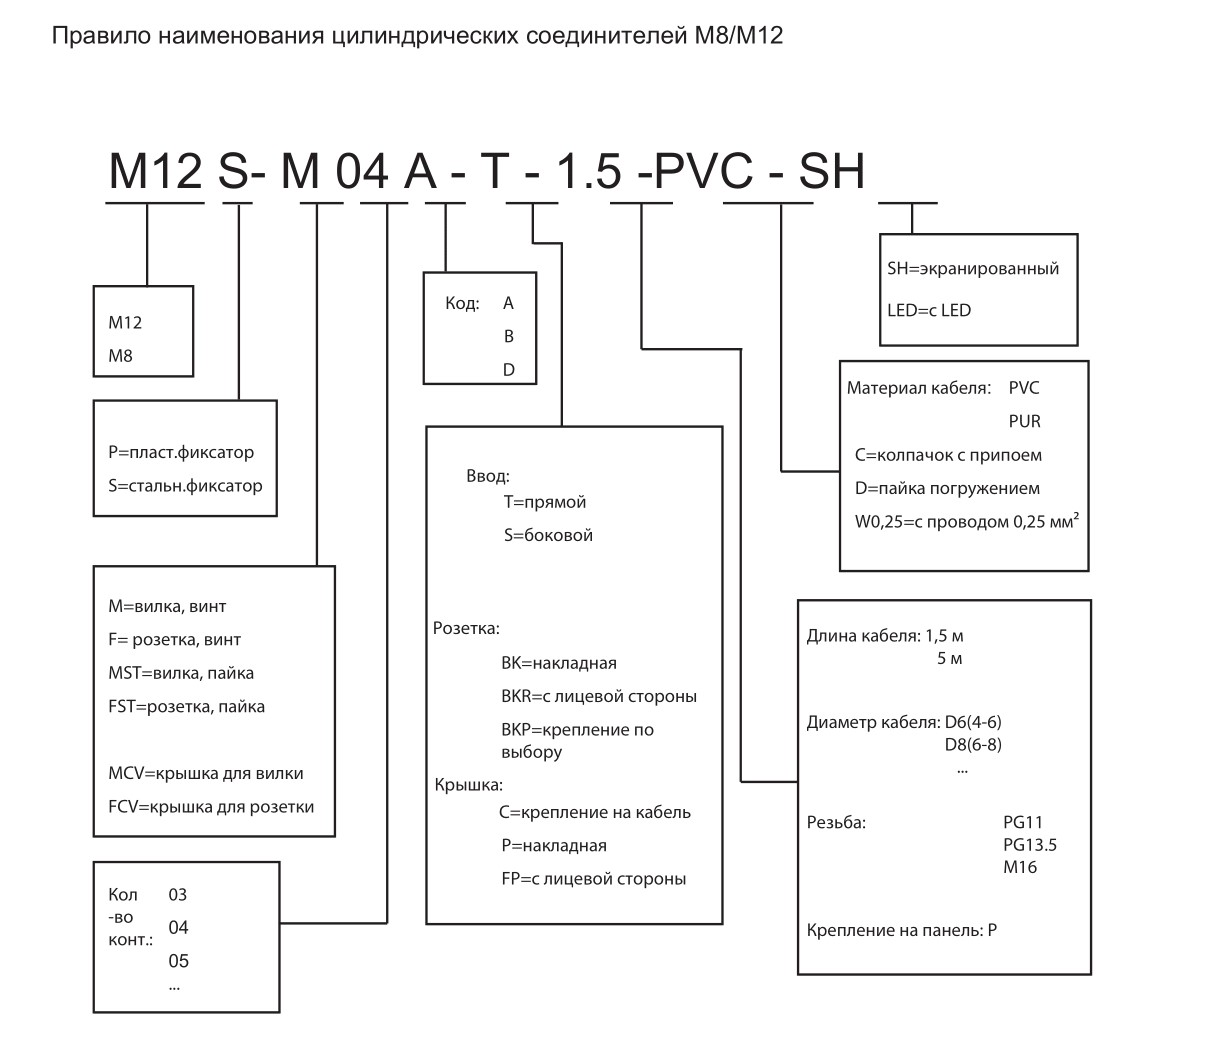 Цилиндрический соединитель-вилка с кабелем M8-M04-5.0-PUR-SH 1620044012043: Структура обозначения